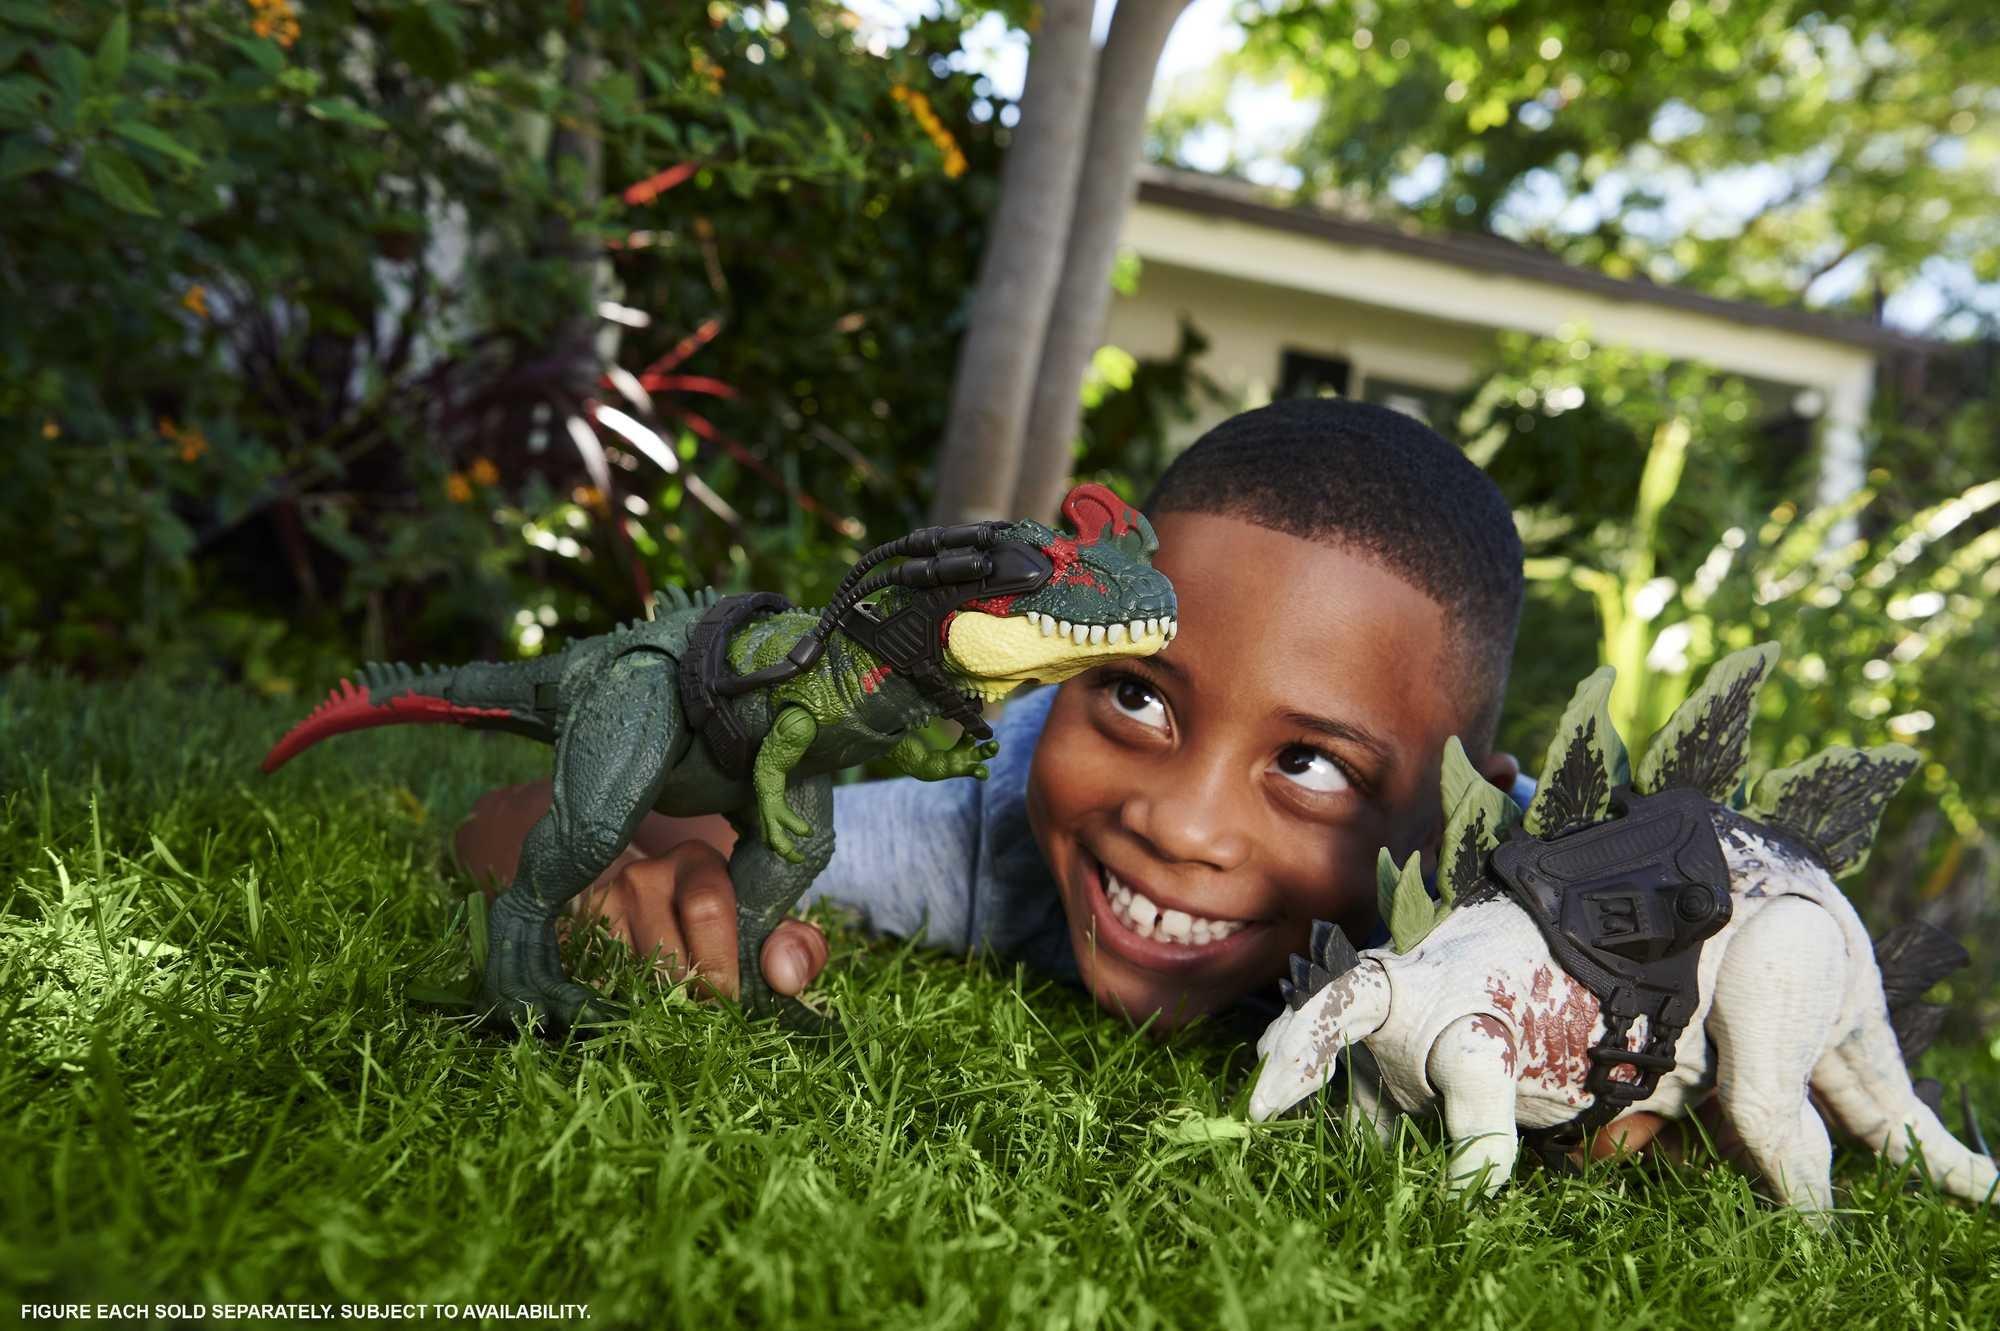 Mattel  Jurassic World HLP25 action figure giocattolo 